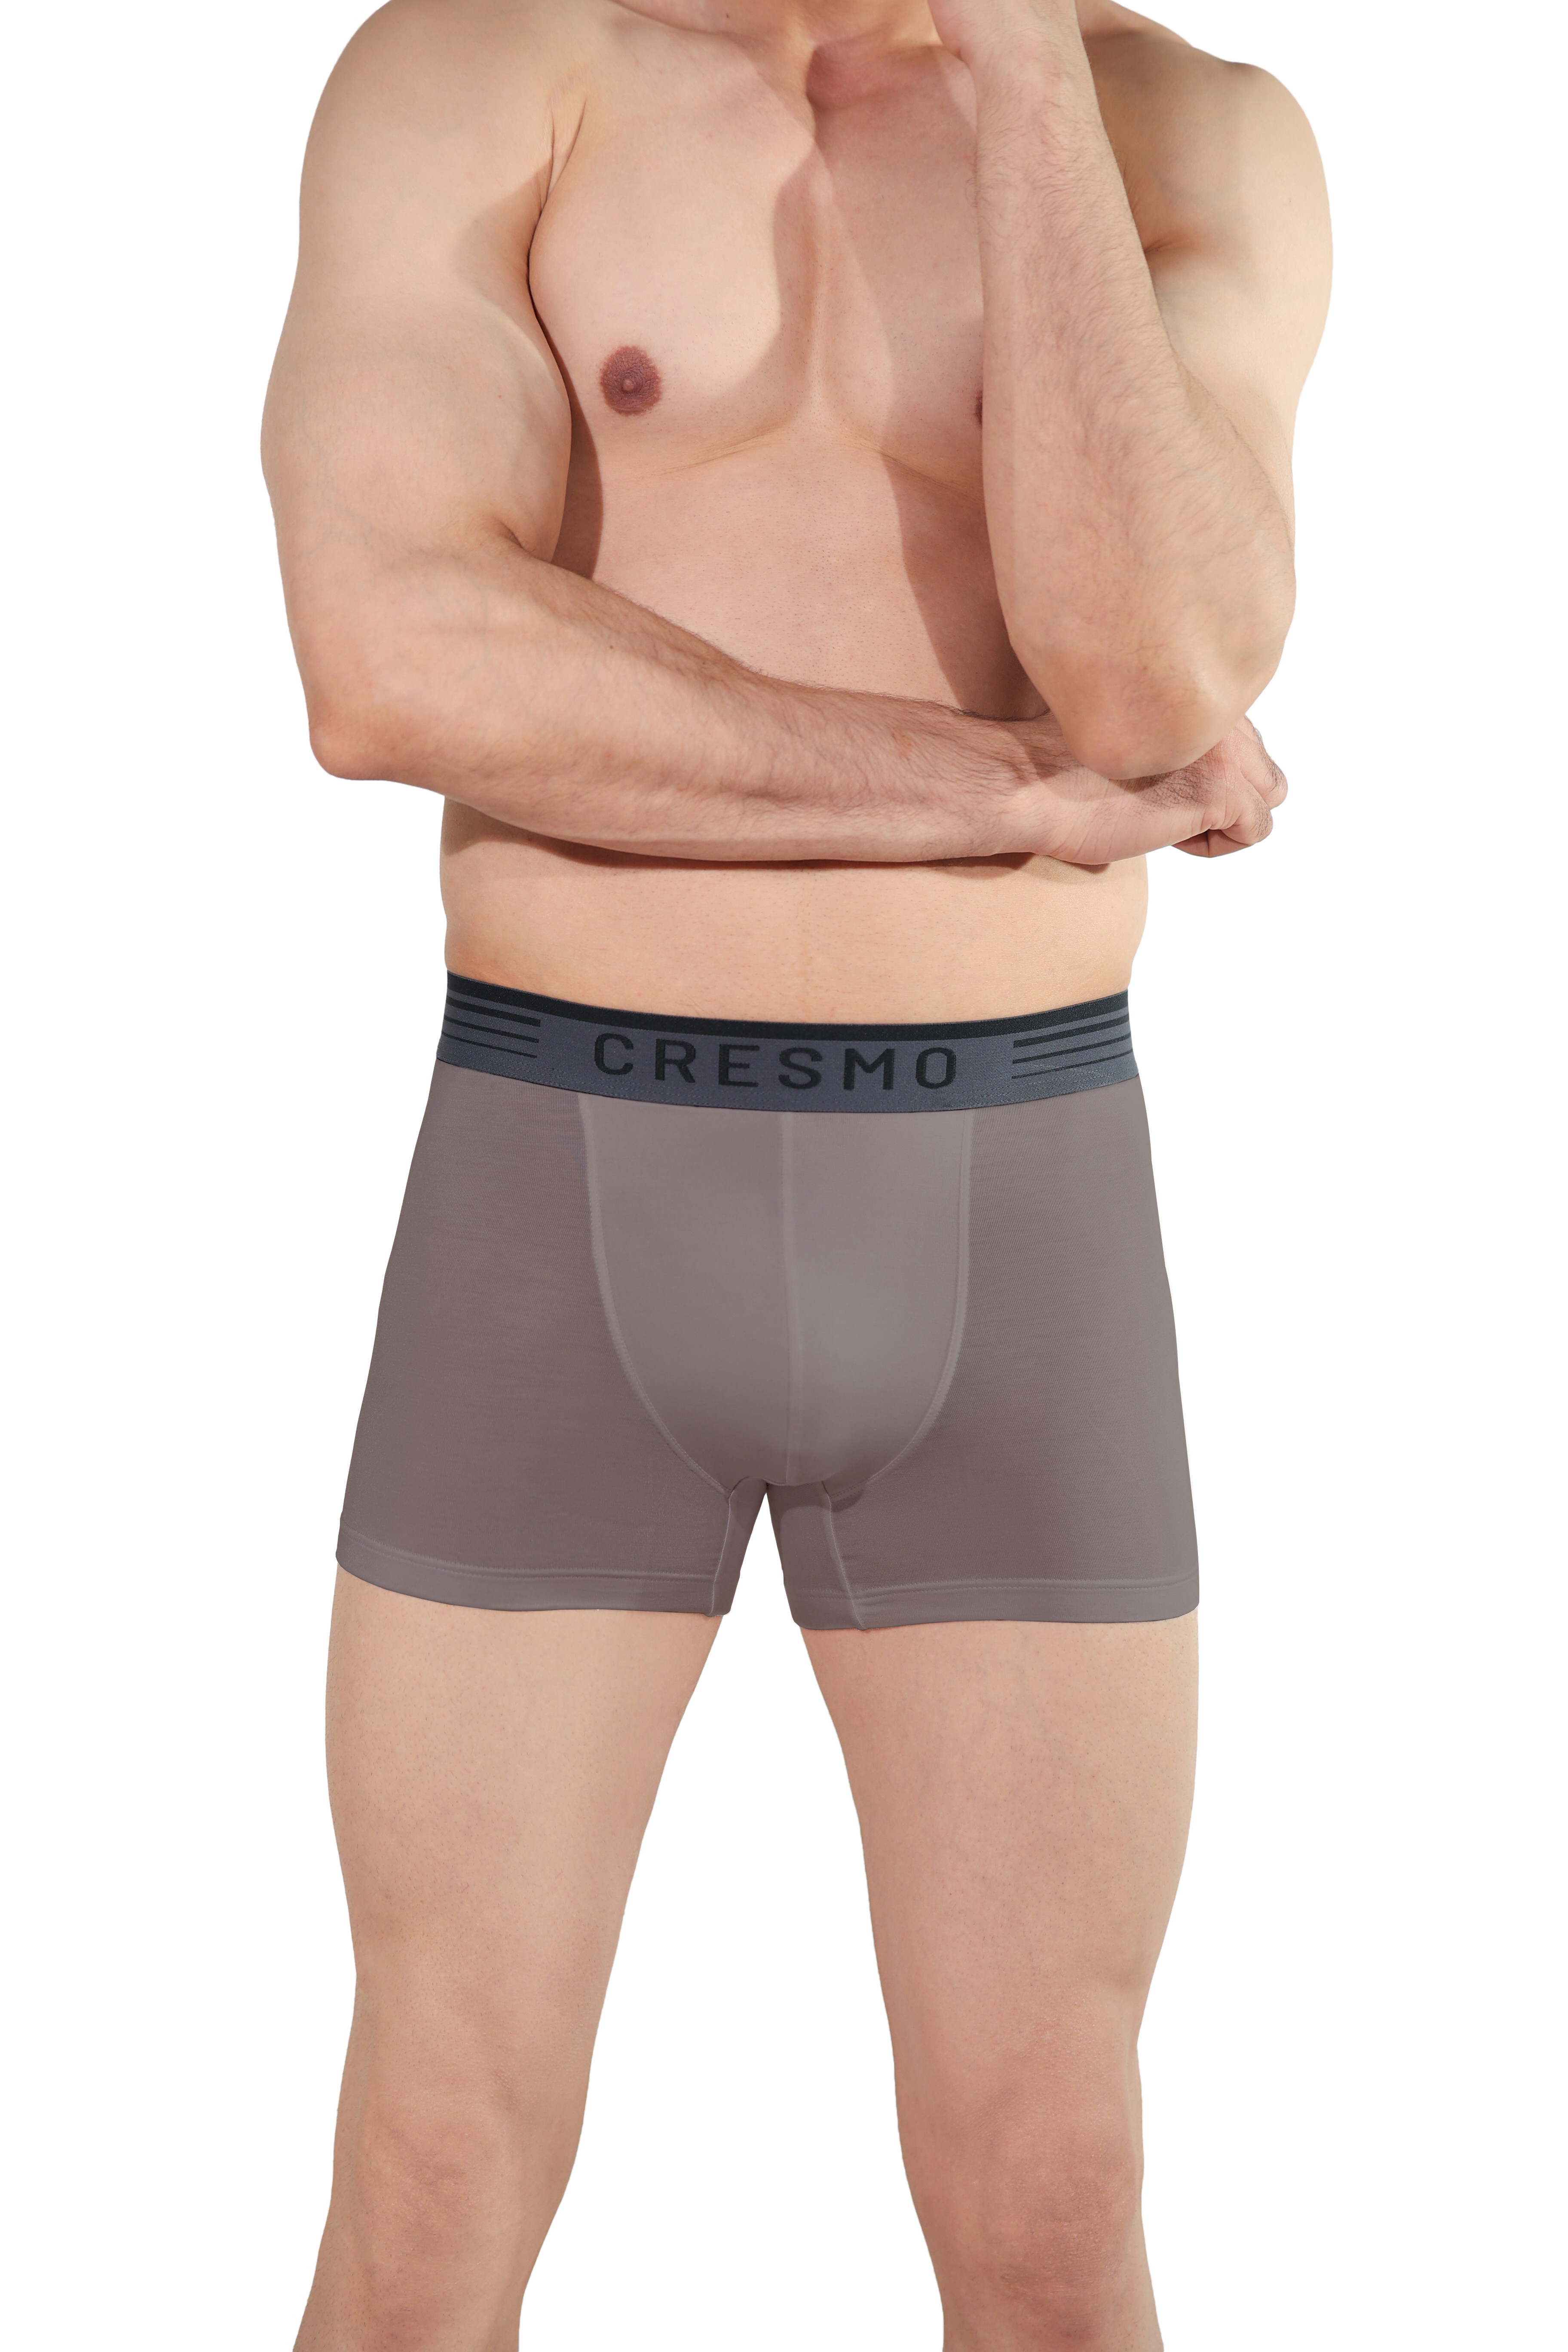 CRESMO | CRESMO Men's Anti-Microbial Micro Modal Underwear Breathable Ultra Soft Trunk